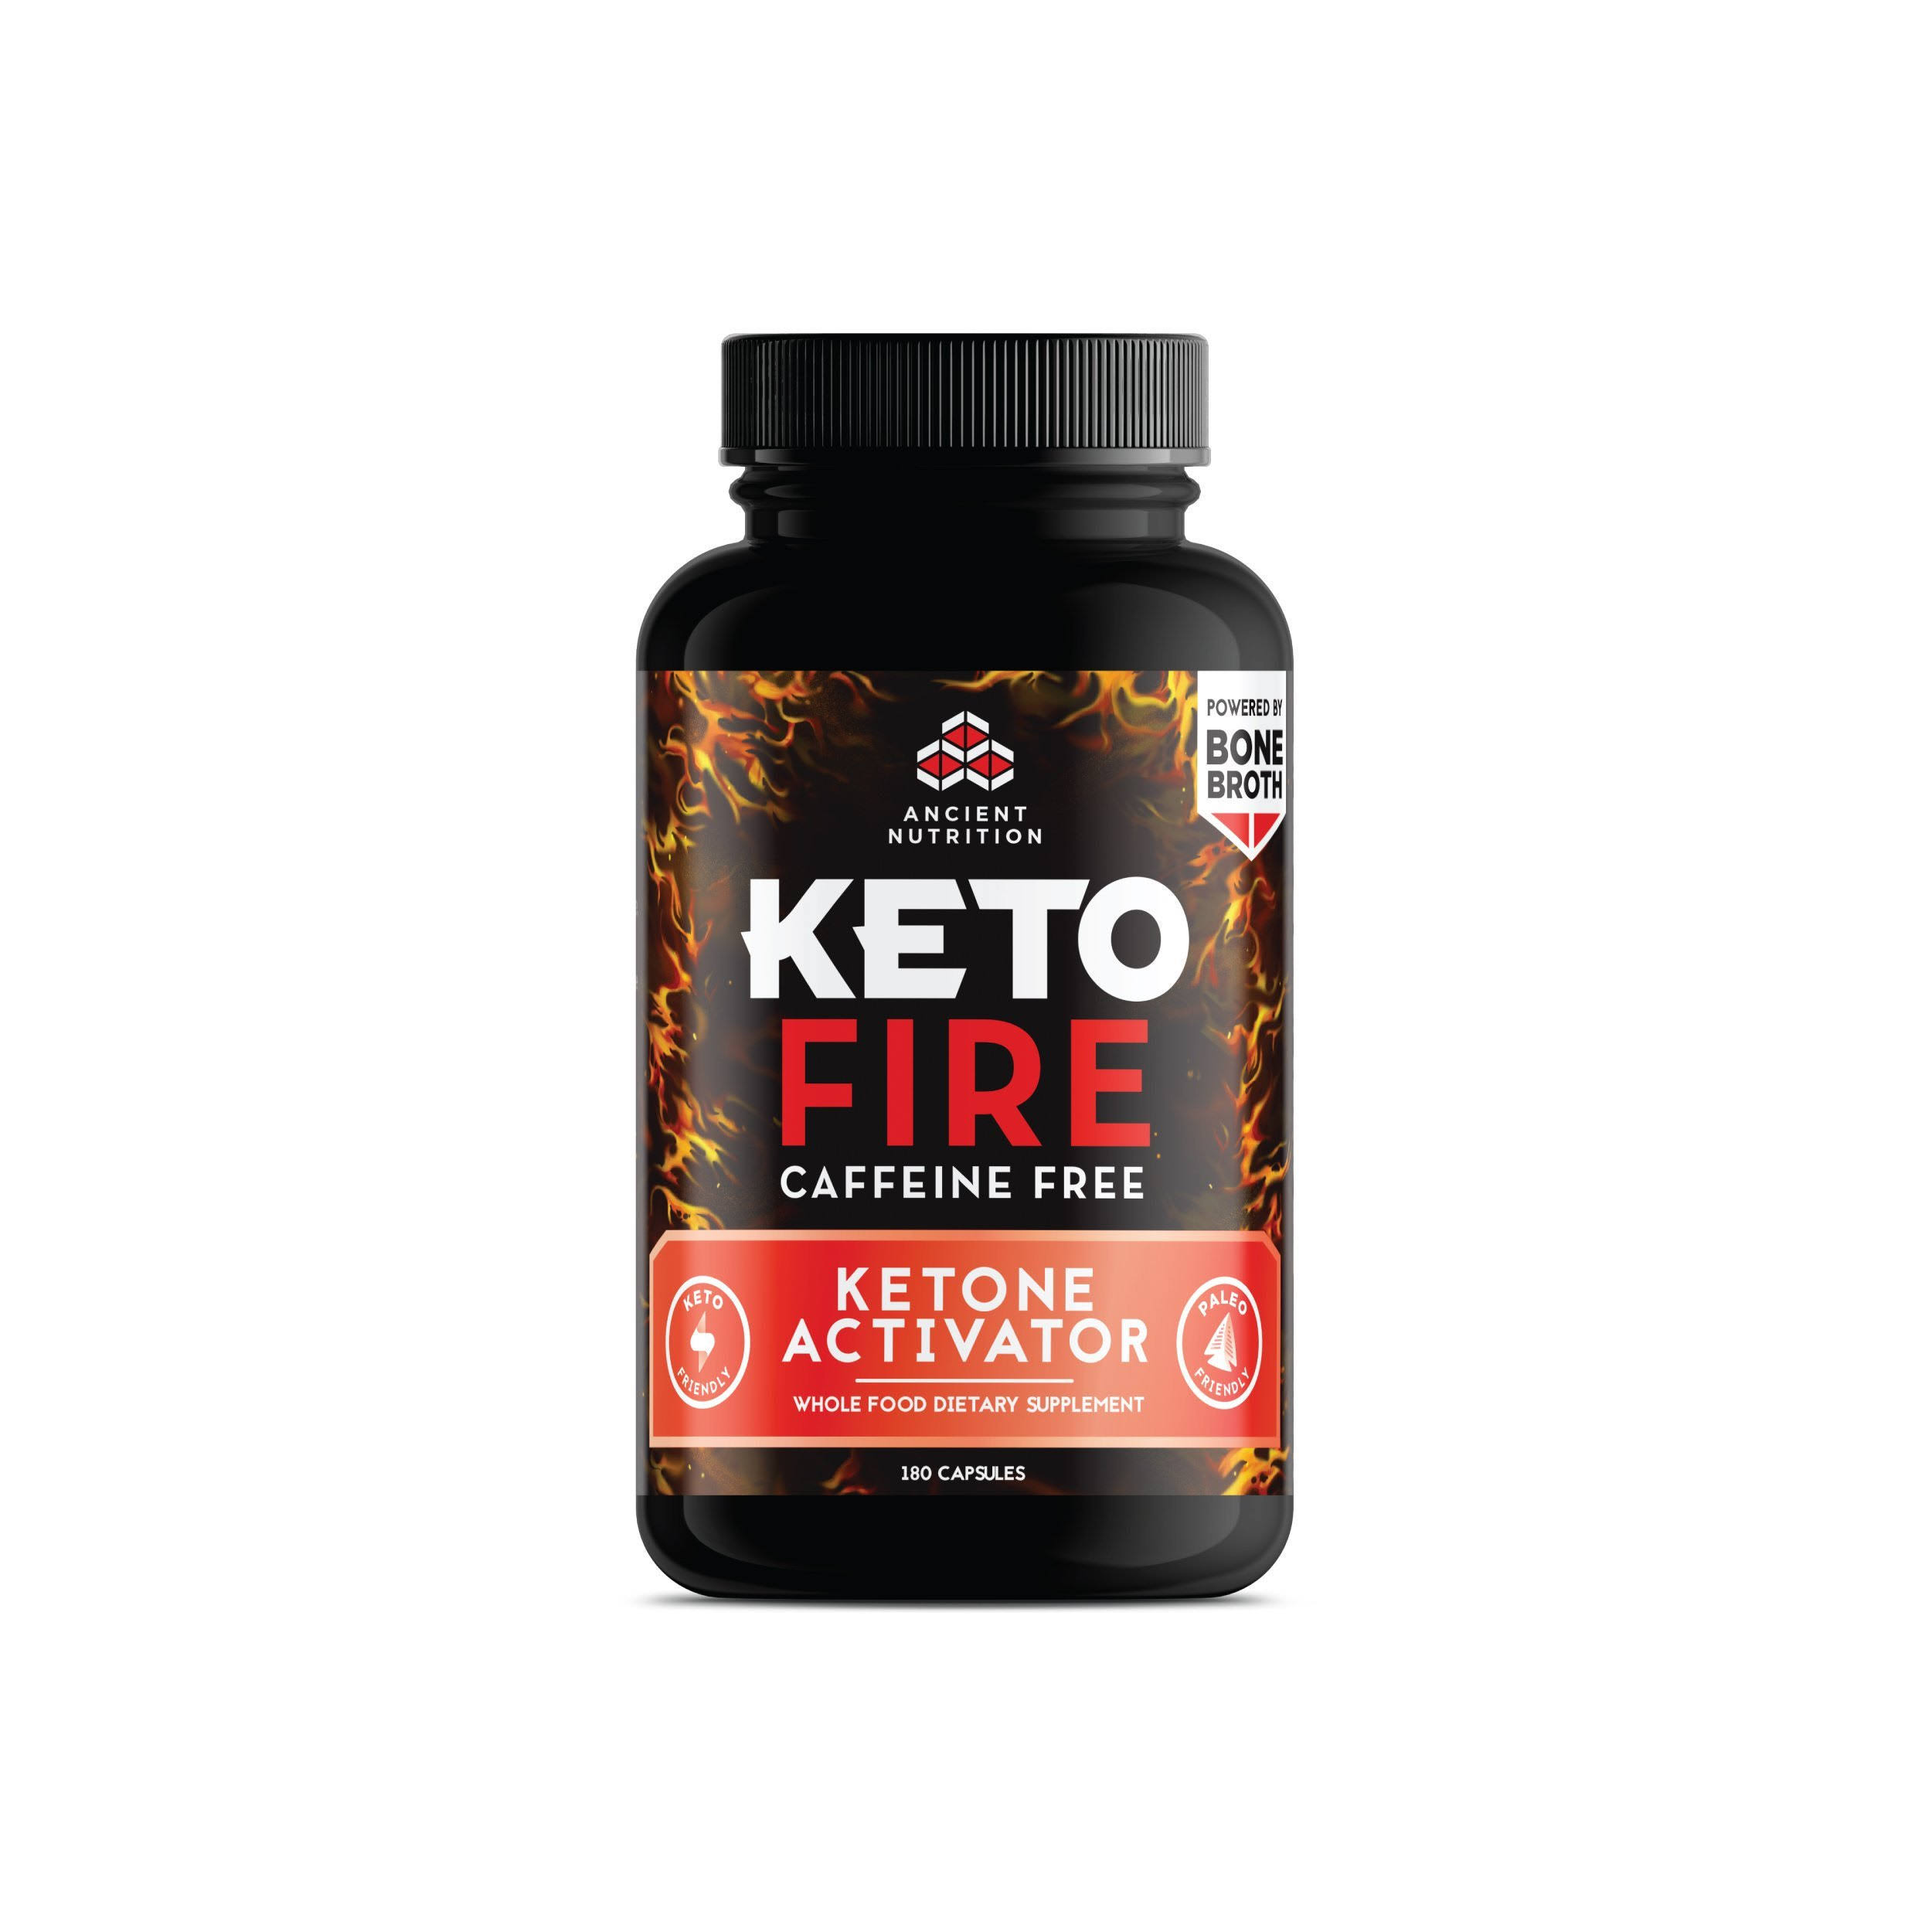 Ancient Nutrition Keto Fire Caffeine Free Capsules - 180ct